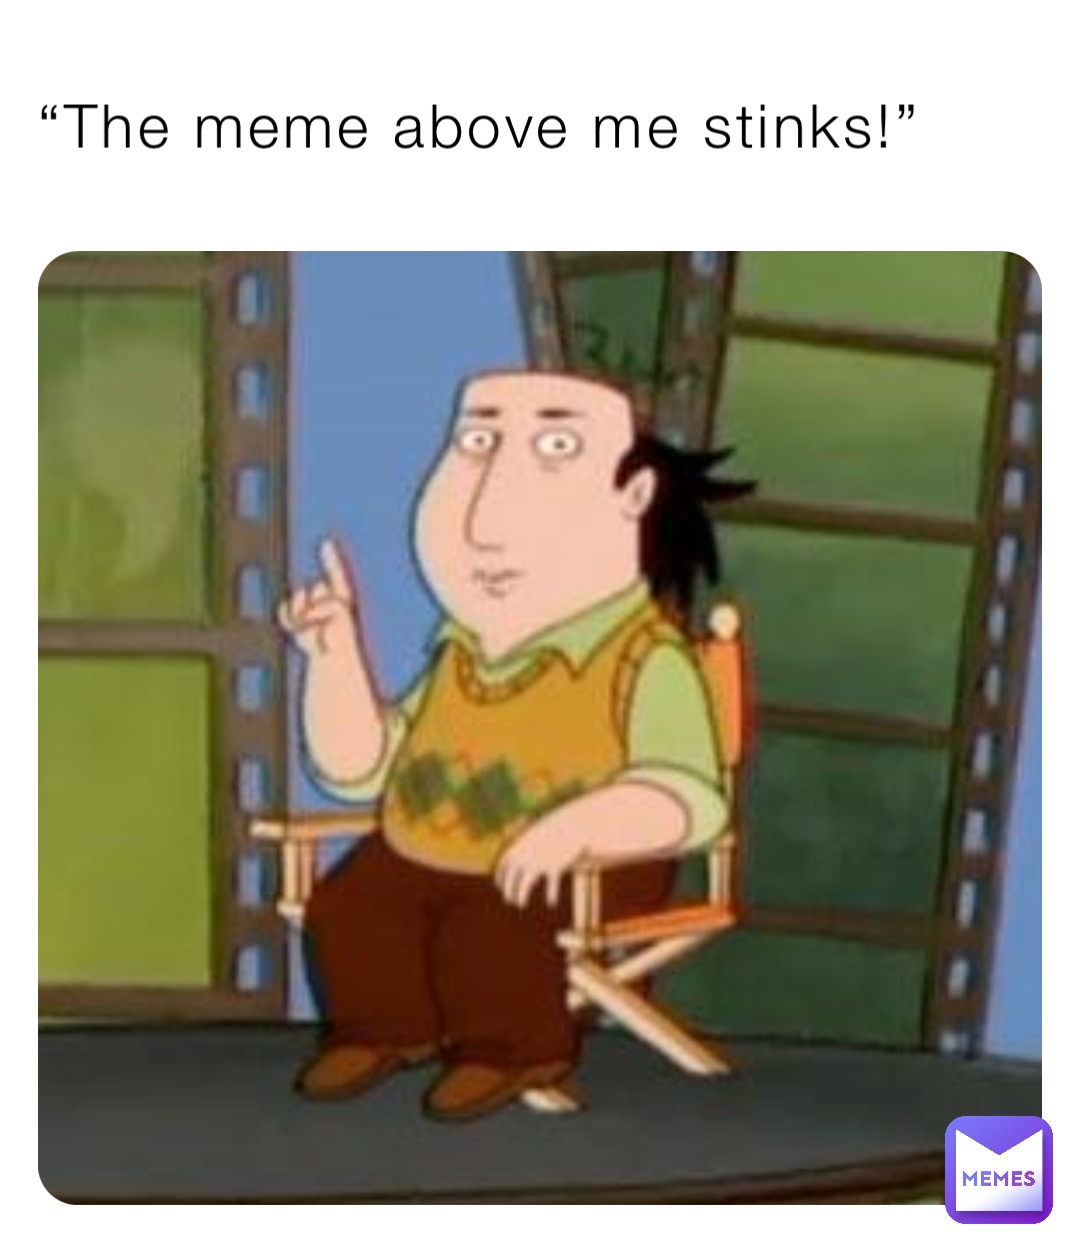 stinks meme